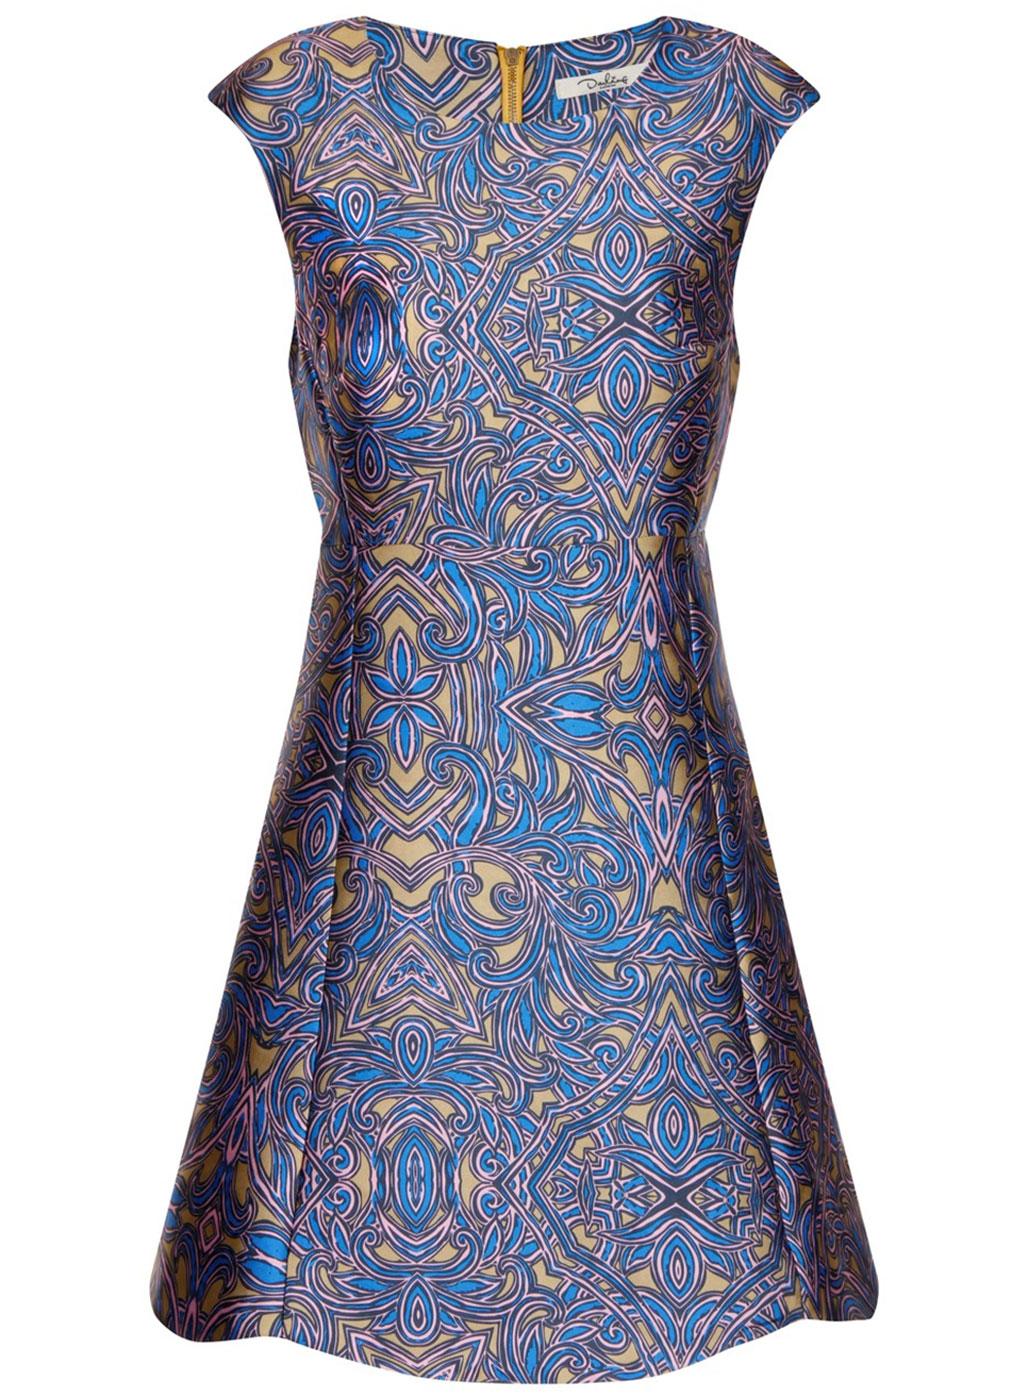 Zoella DARLING Retro 70s Baroque Print Dress